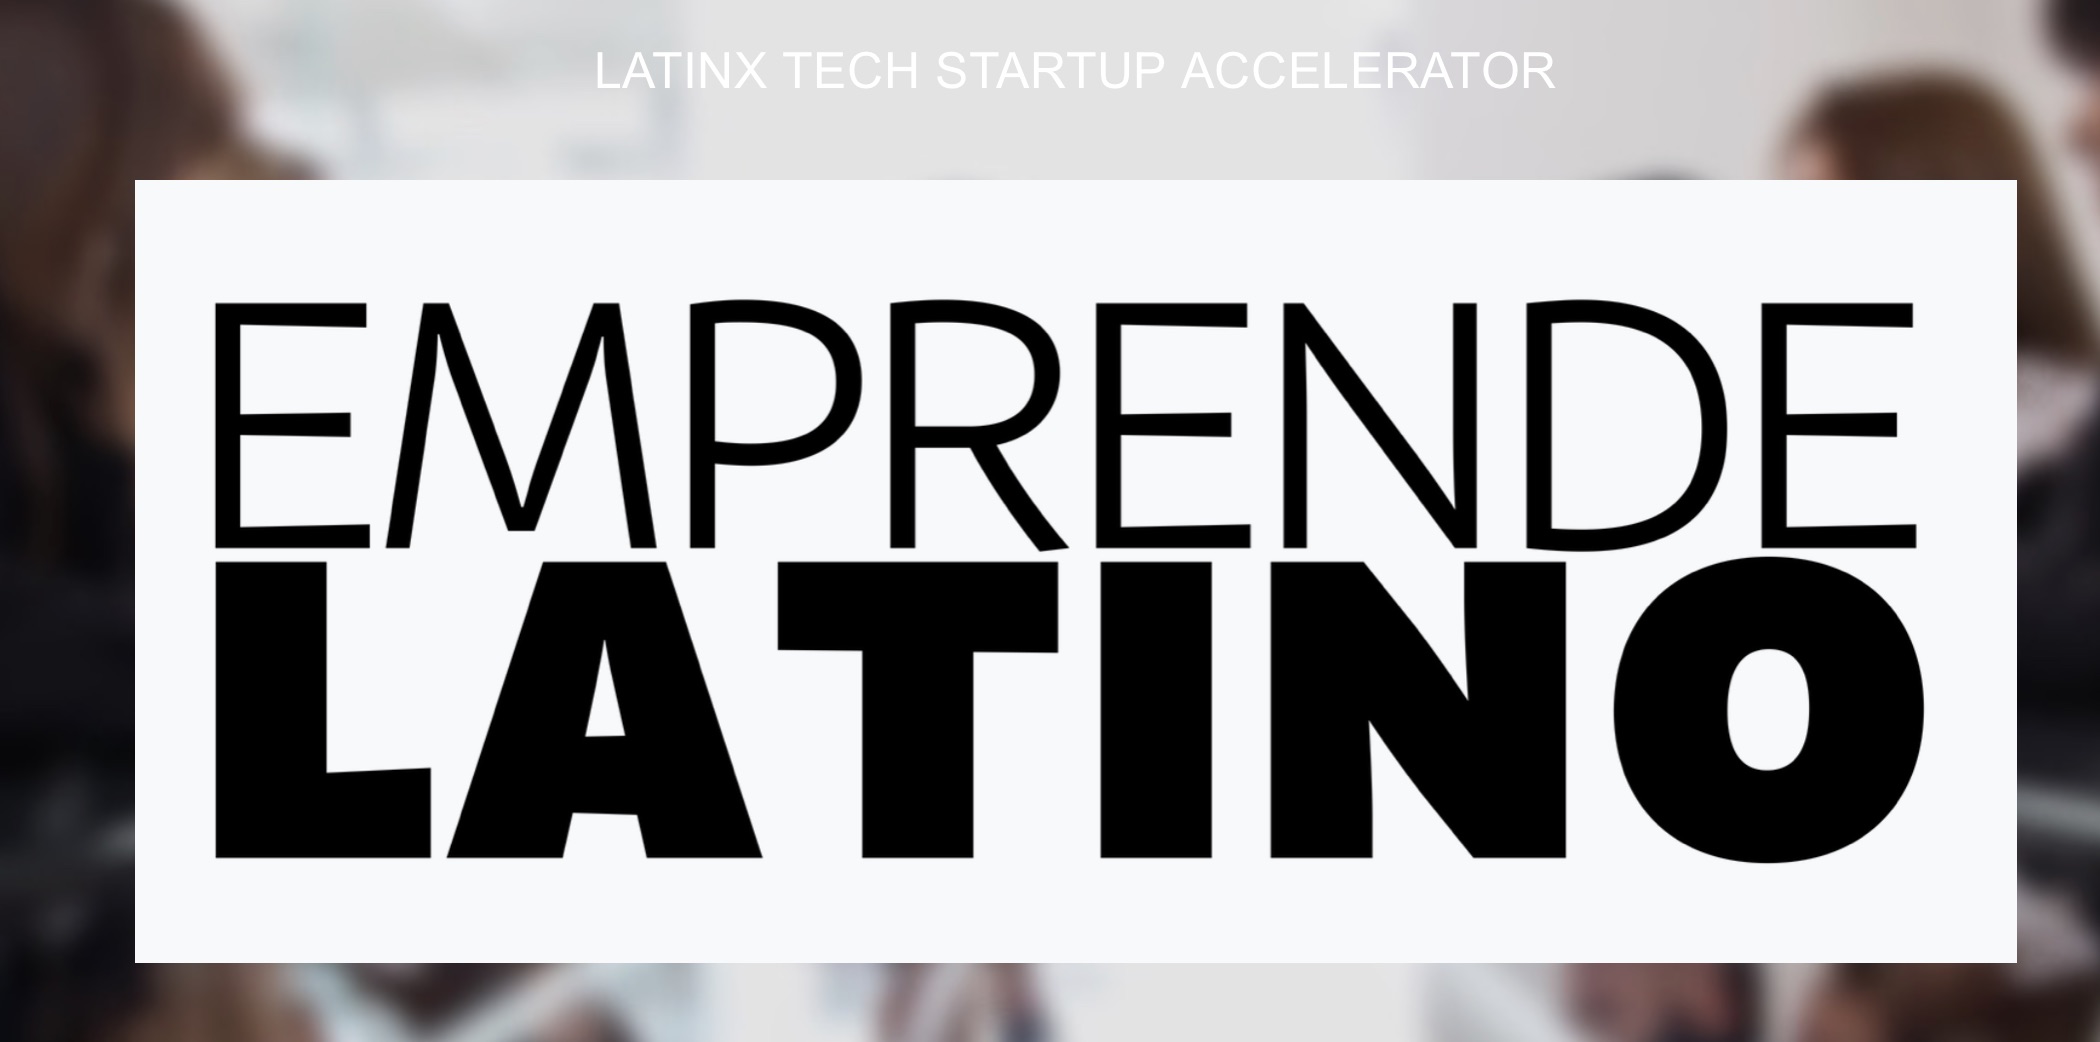 Latinx startup